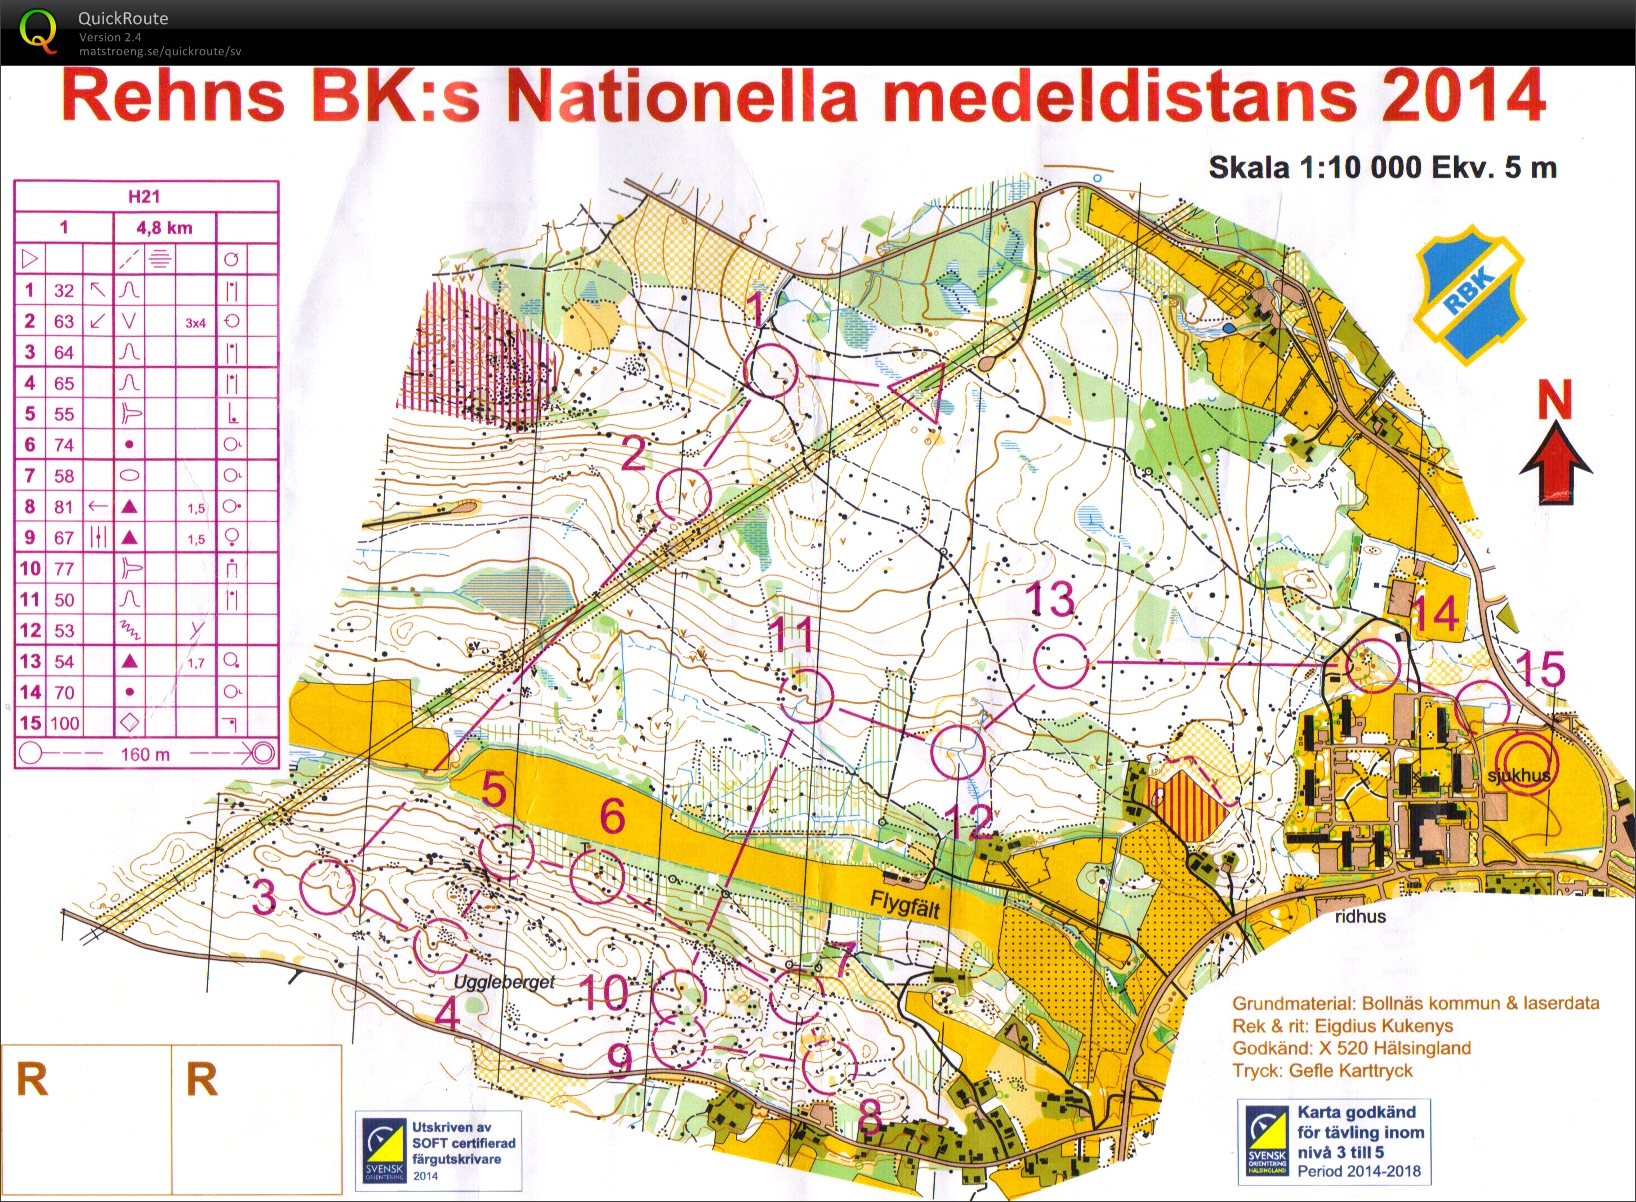 Rehns BK:s nationella medeldistans (31-05-2014)